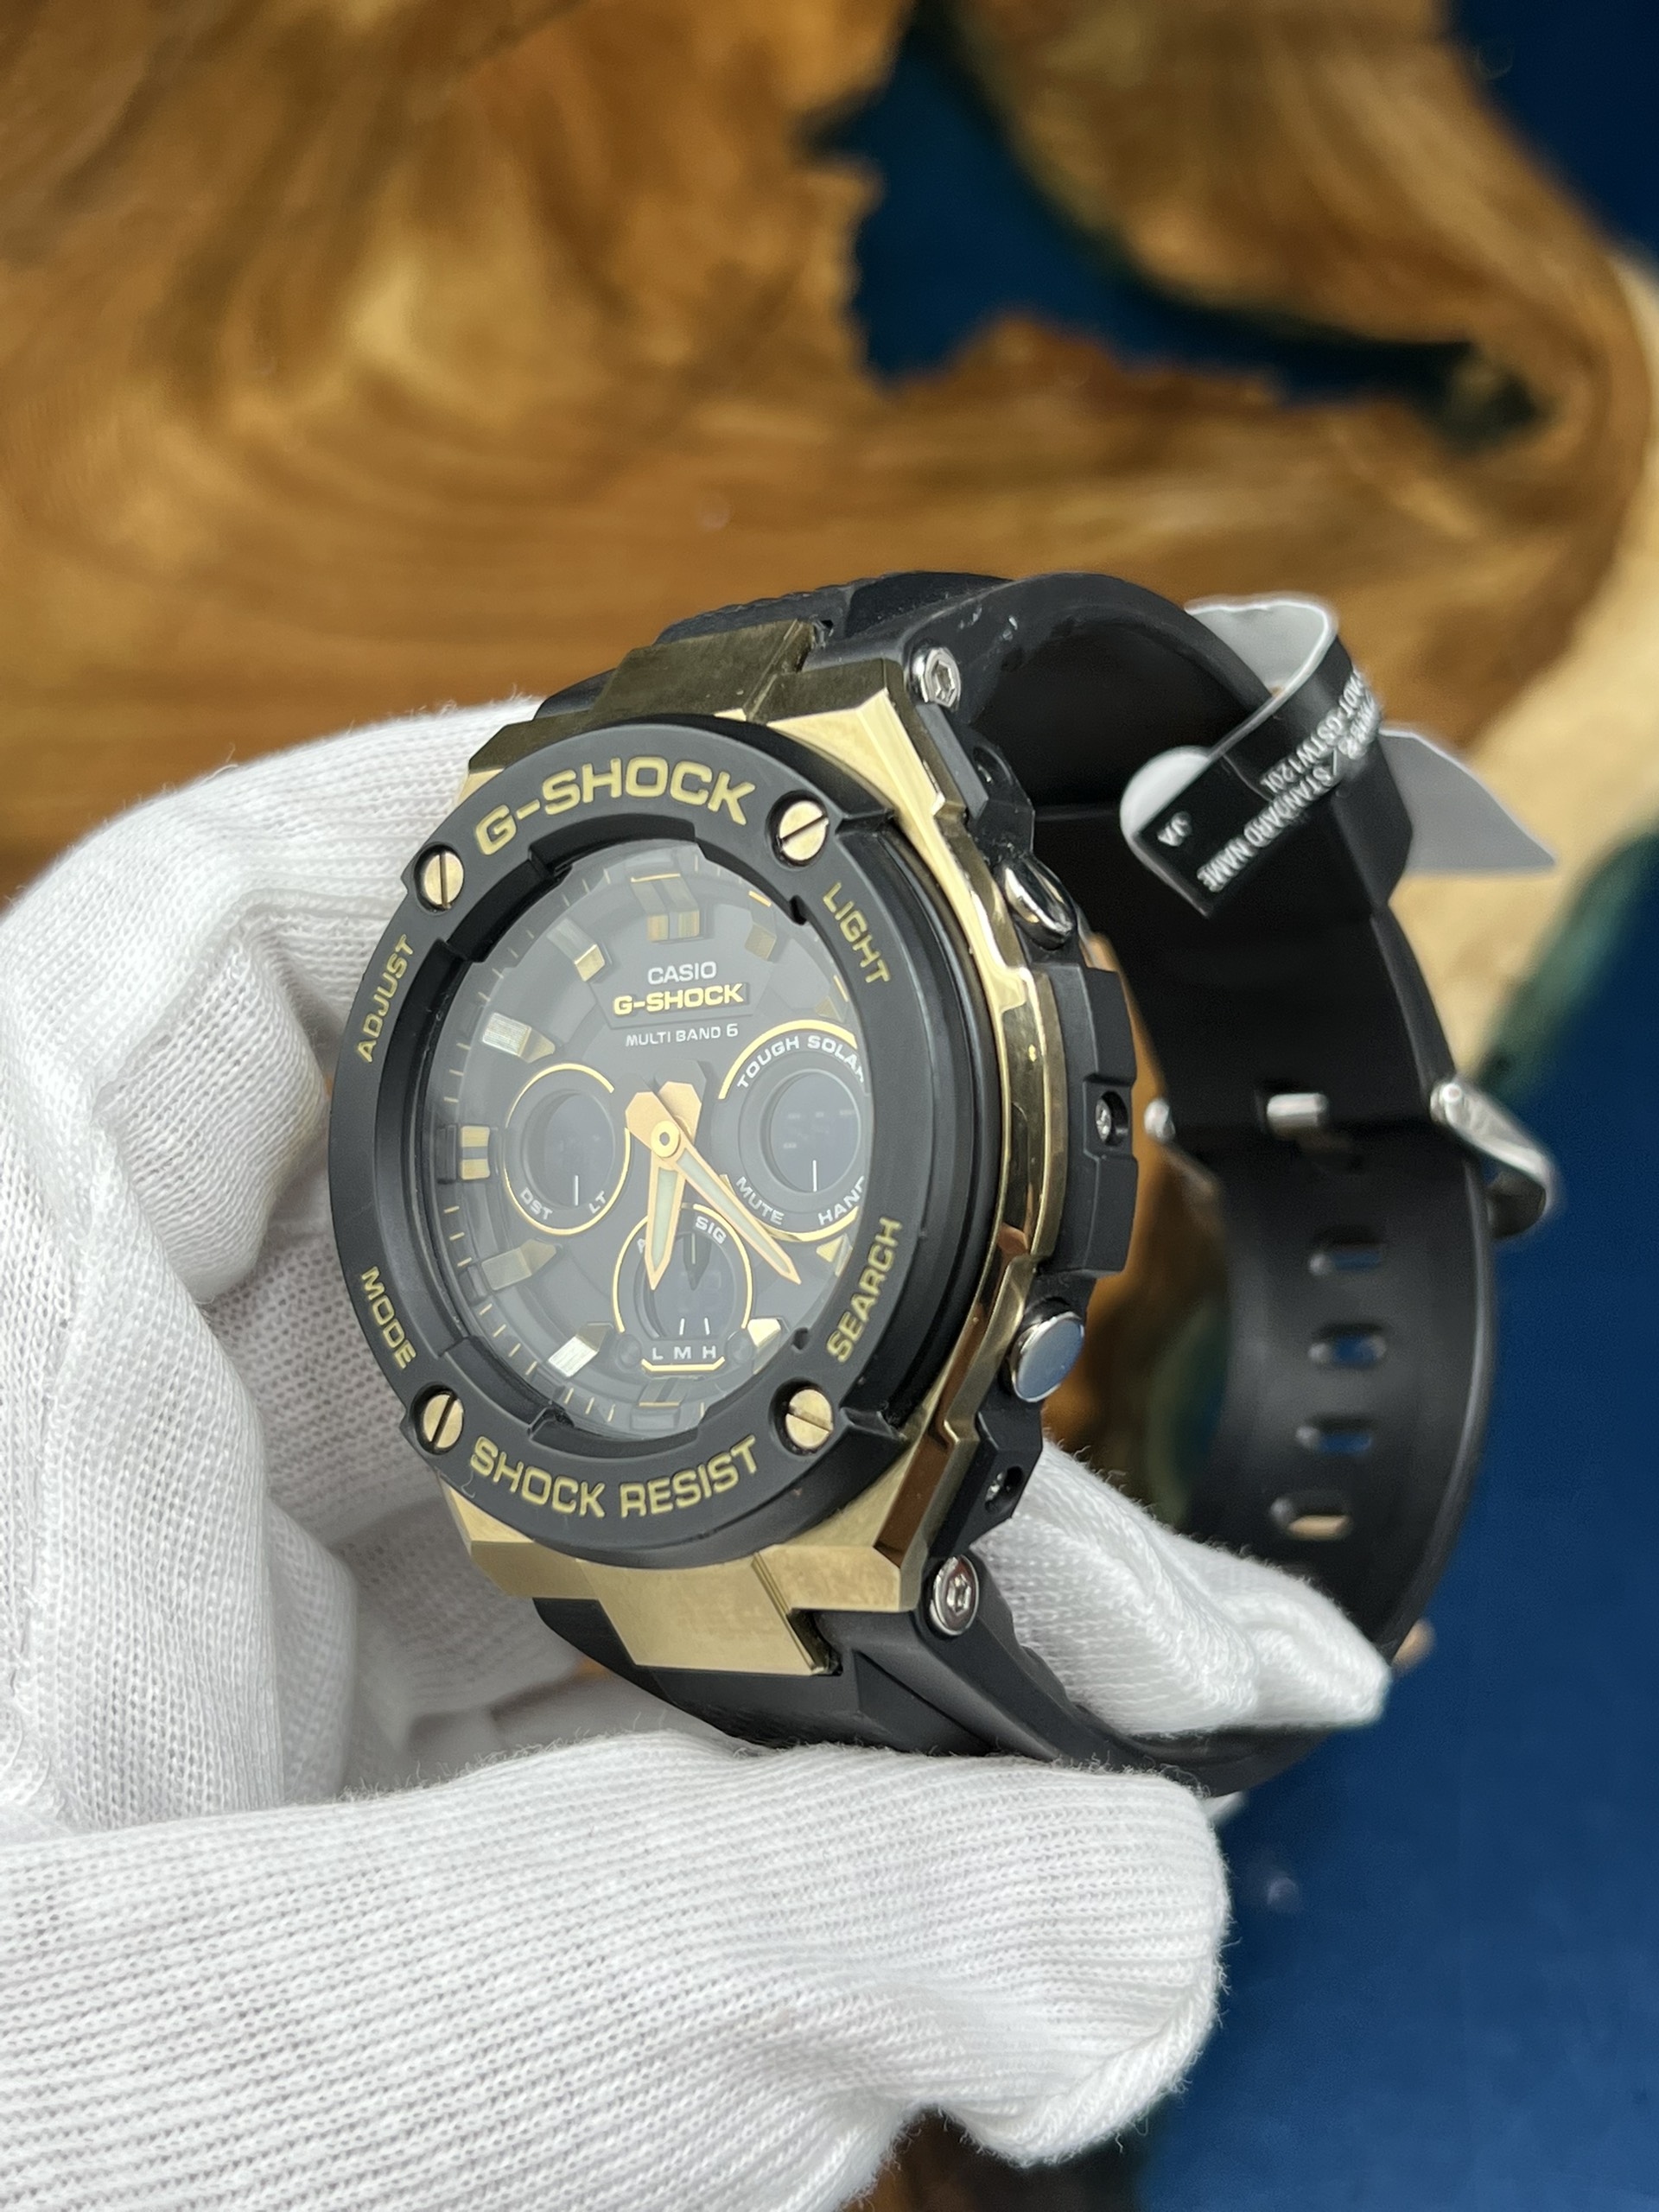 CASIO G-SHOCK GST-W300G-1A9JF腕時計(アナログ)